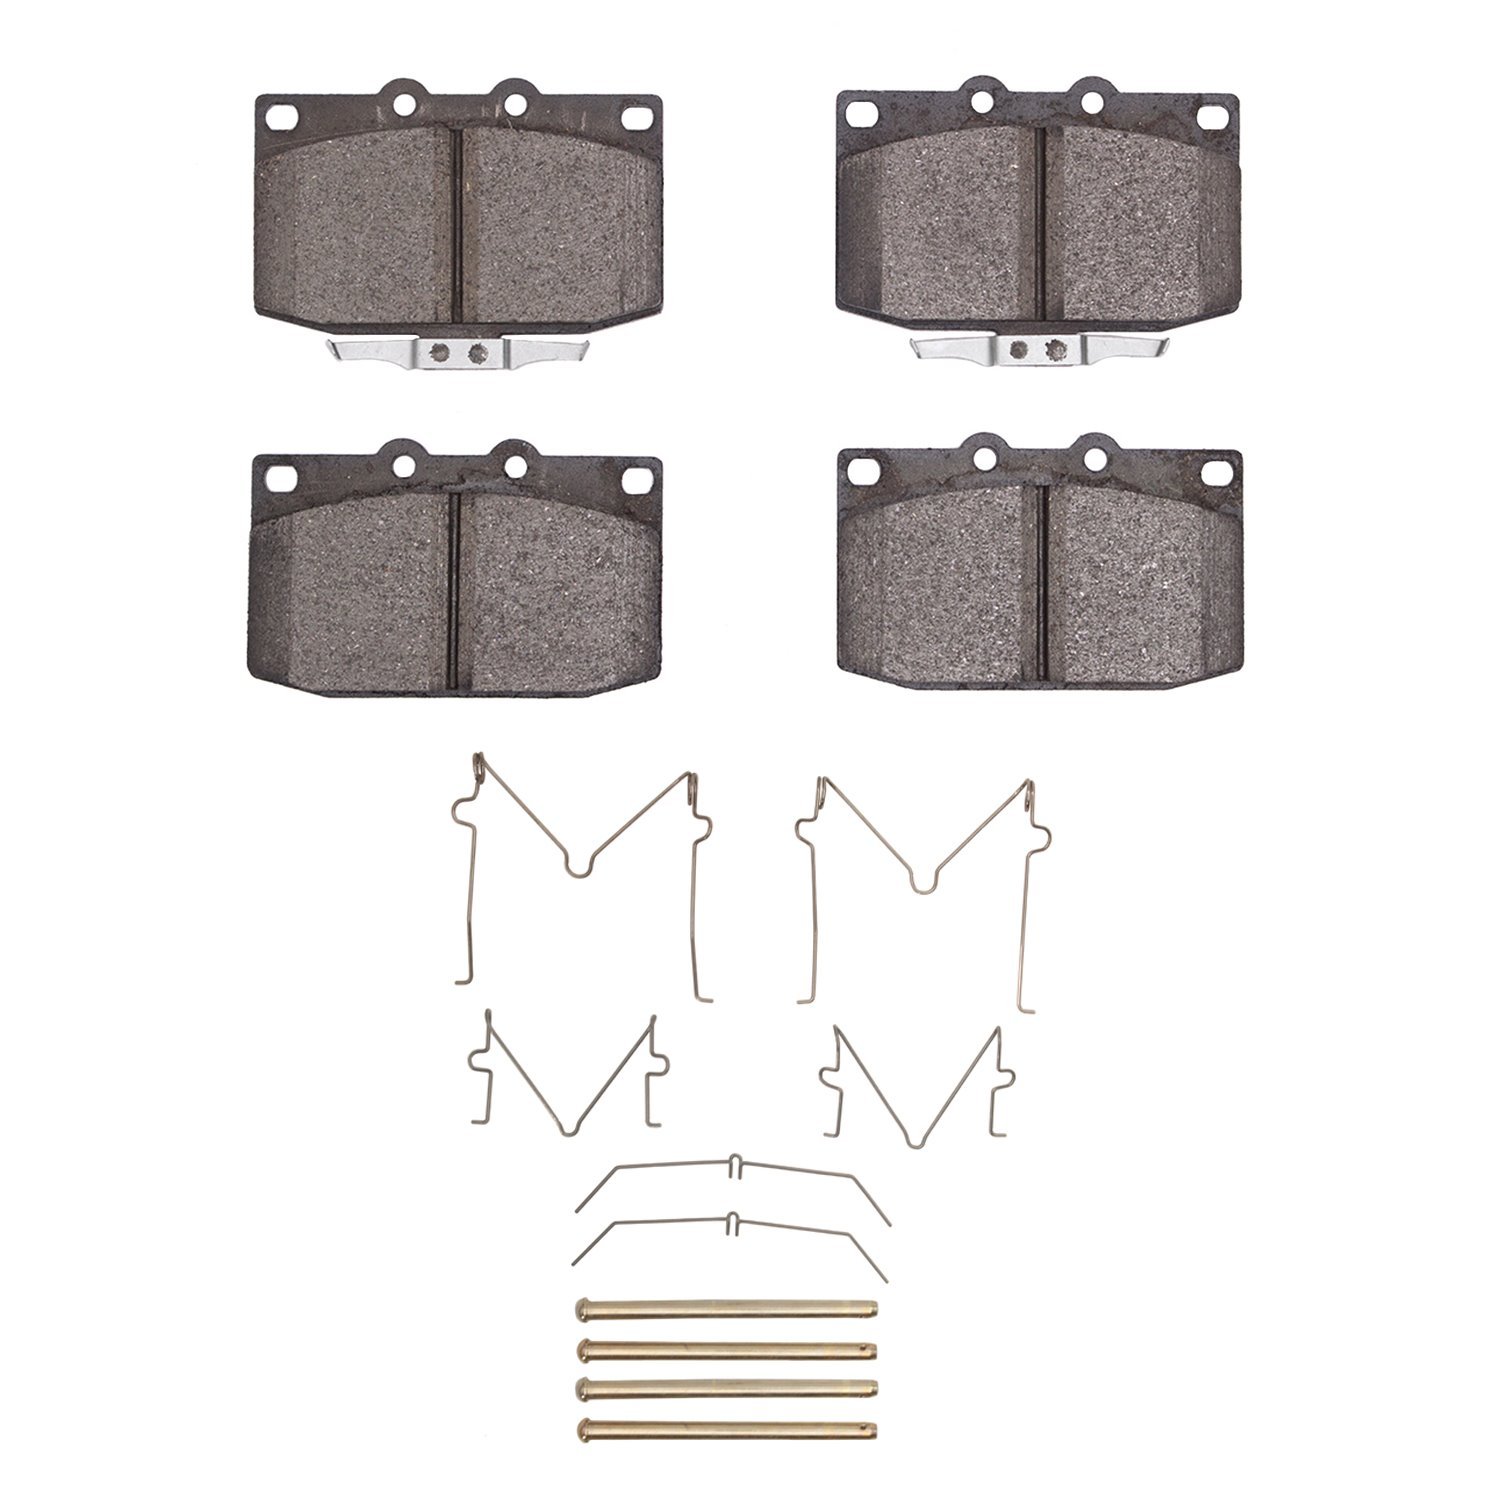 1310-0331-02 3000-Series Ceramic Brake Pads & Hardware Kit, 1986-1991 Ford/Lincoln/Mercury/Mazda, Position: Front